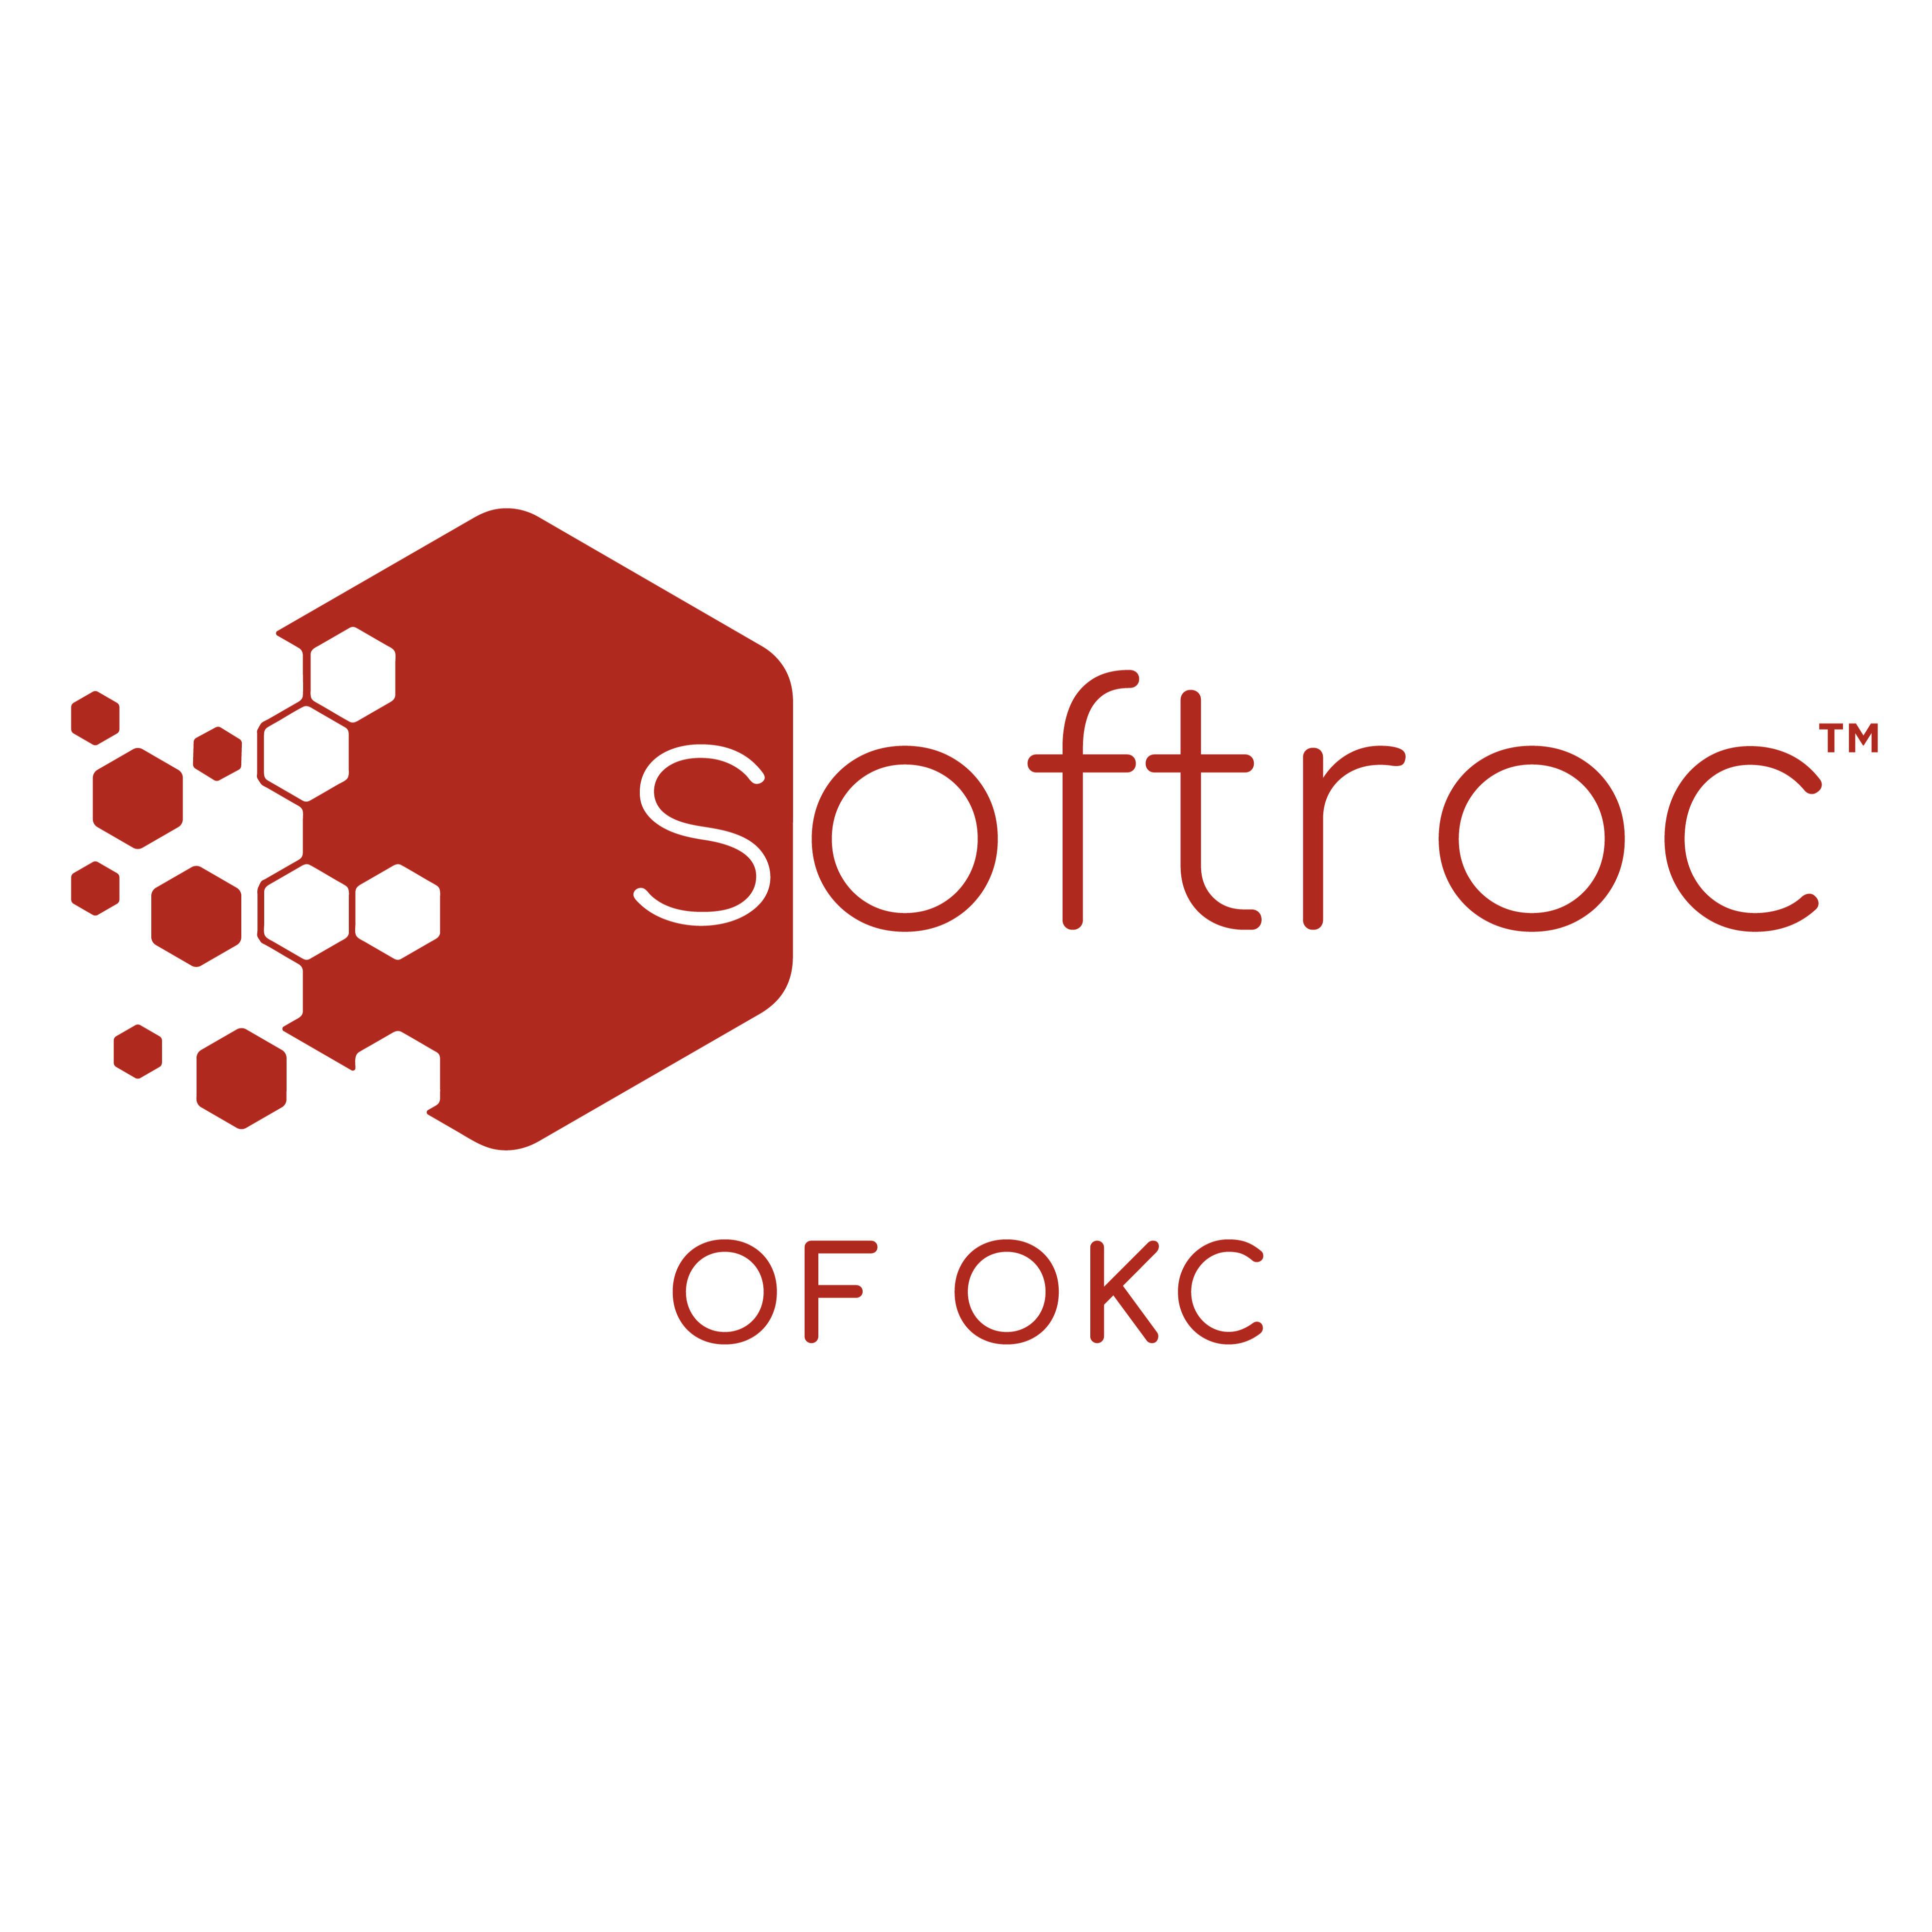 Softroc of OKC